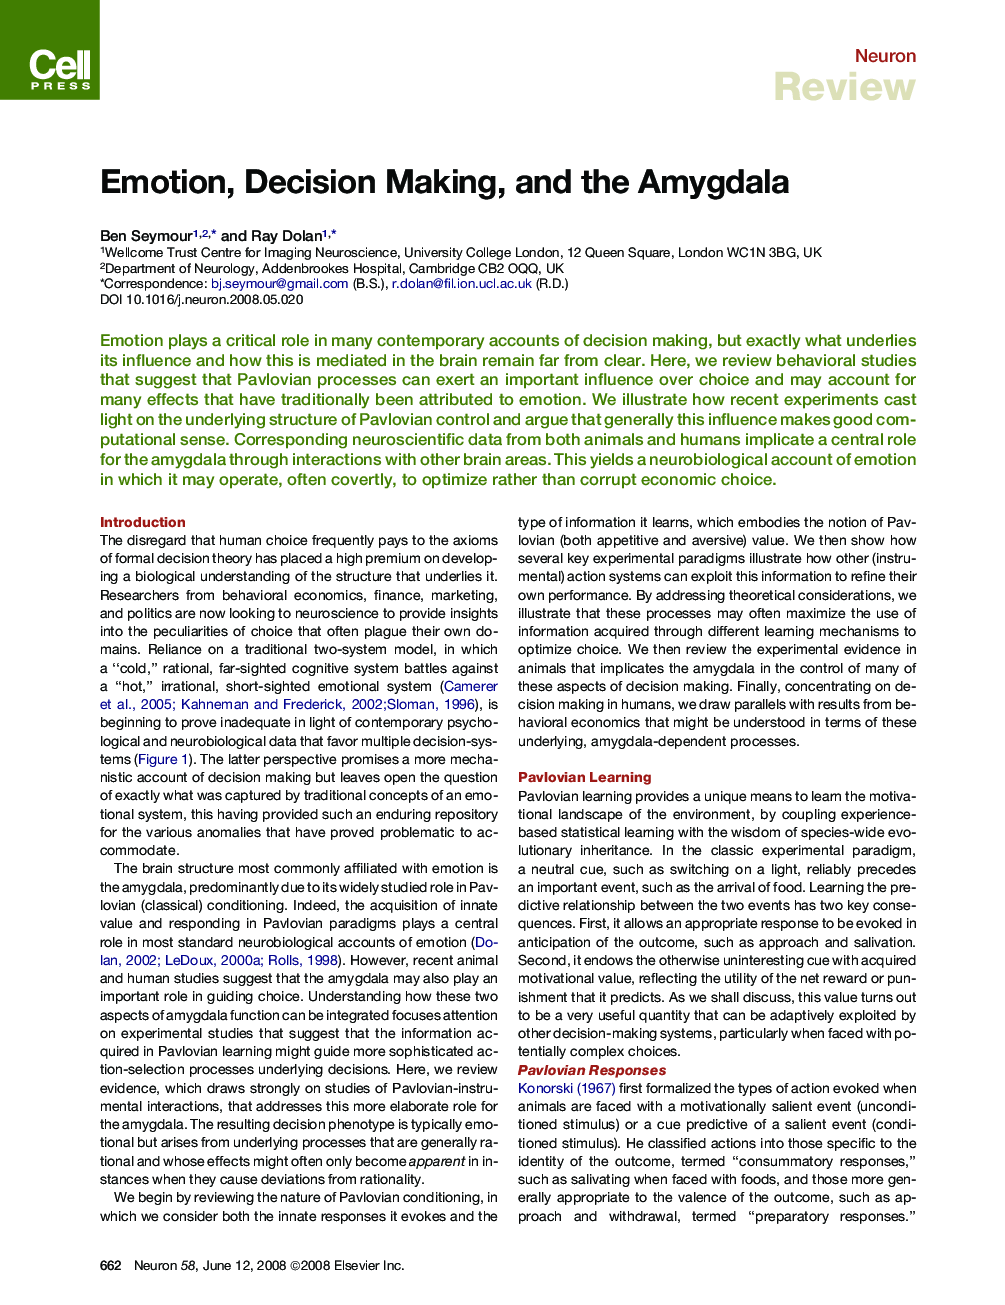 Emotion, Decision Making, and the Amygdala